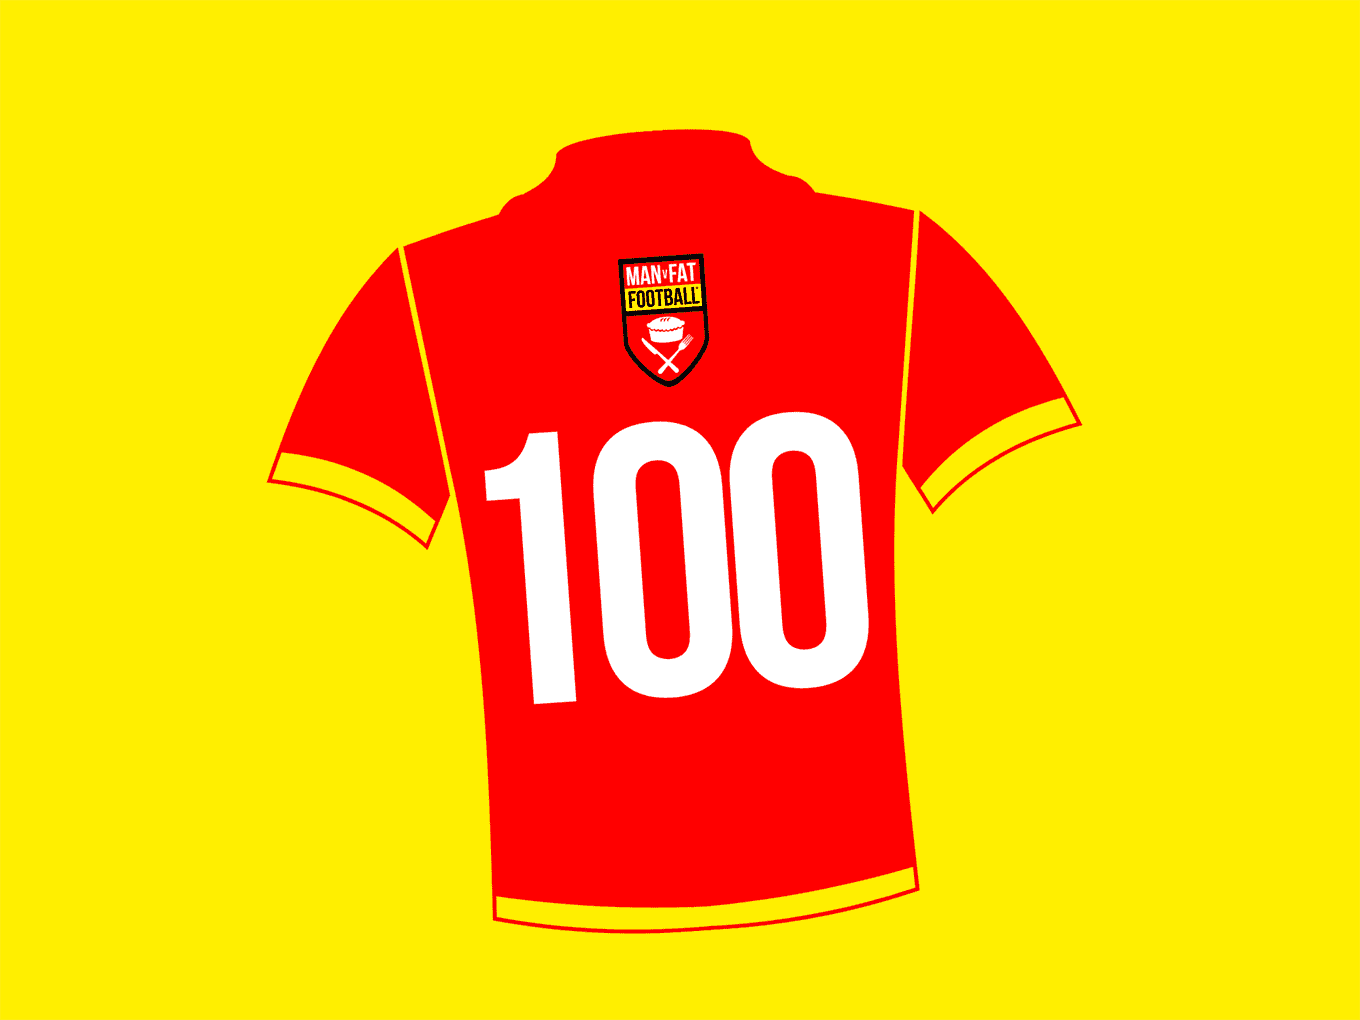 MAN v FAT Football lanza su club número 100